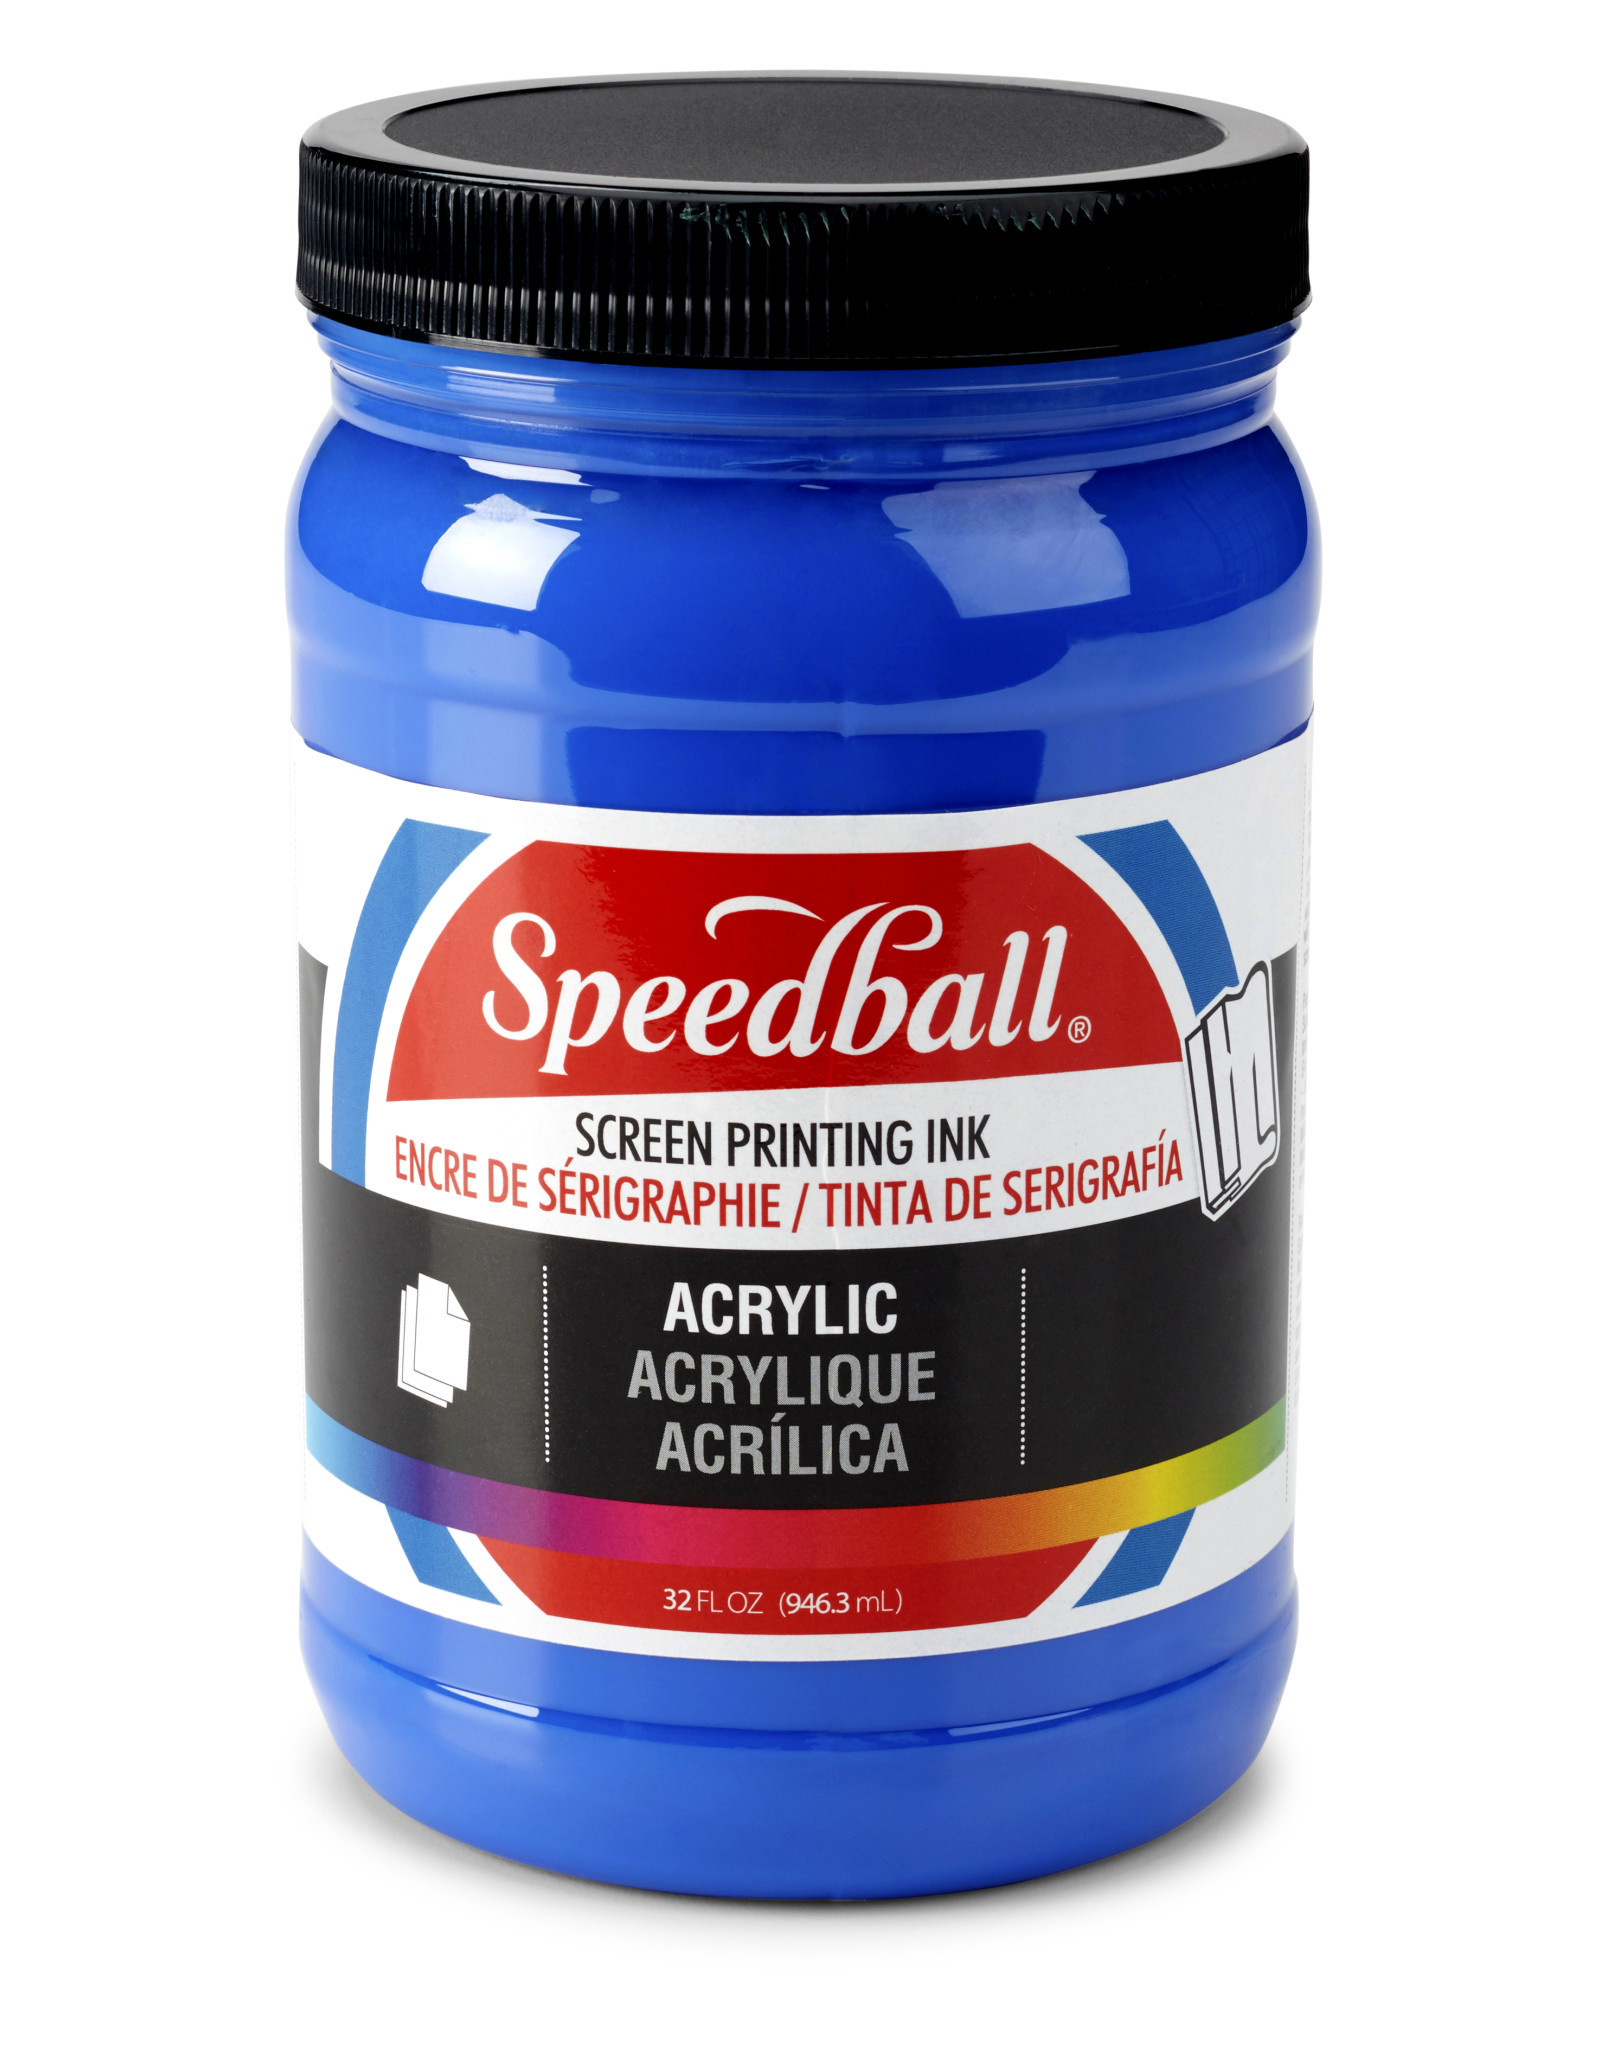 SPEEDBALL ART PRODUCTS Speedball Acrylic Screen Printing Ink, Ultramarine Blue, 32oz